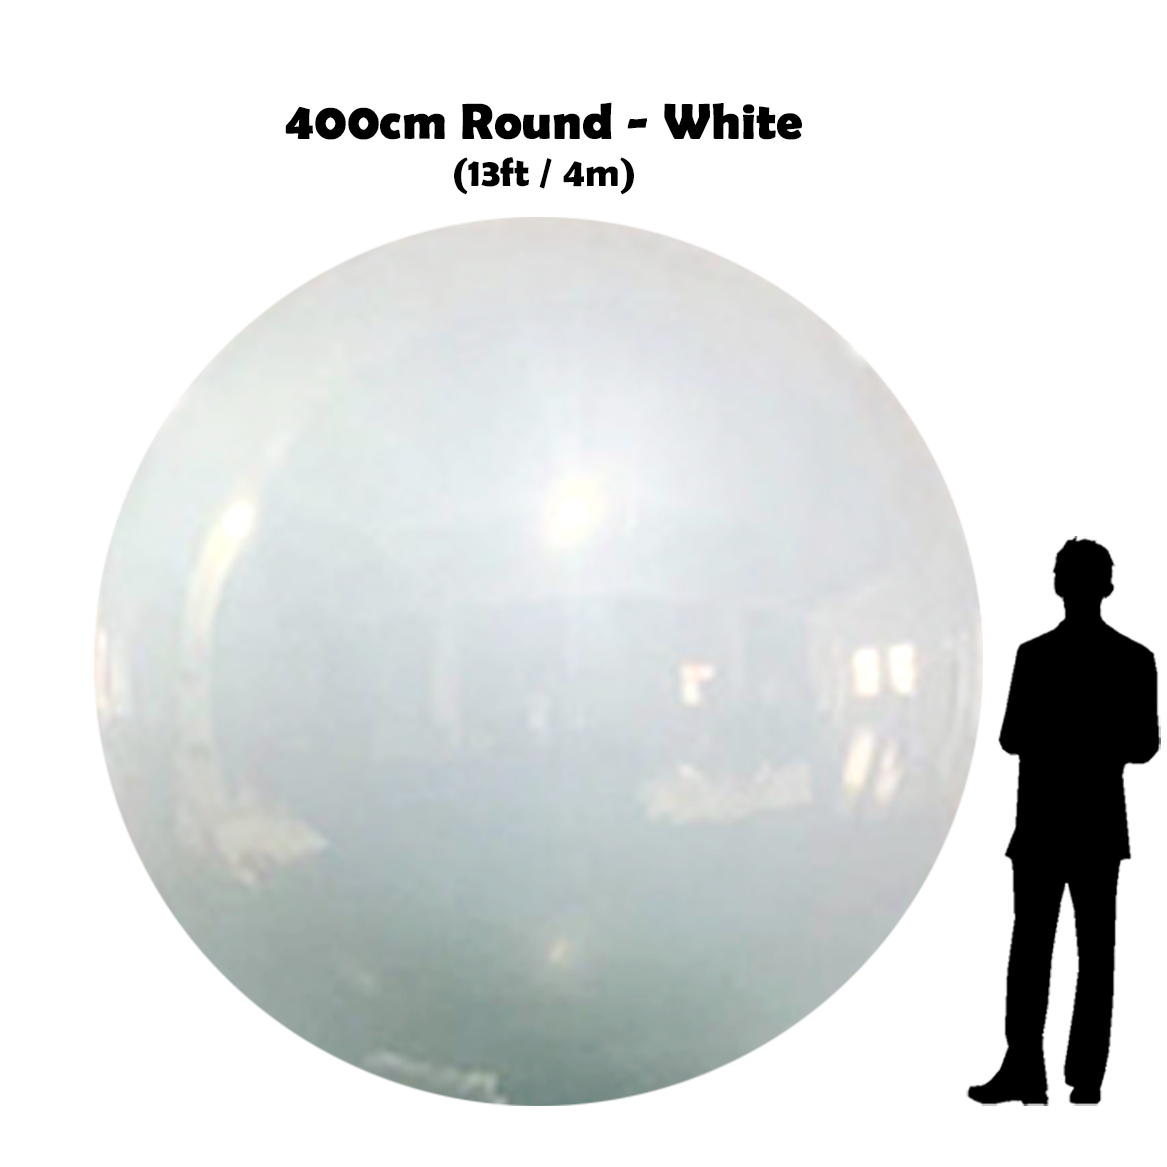 400 cm Big White ball beside 5'10 guy silhouette 